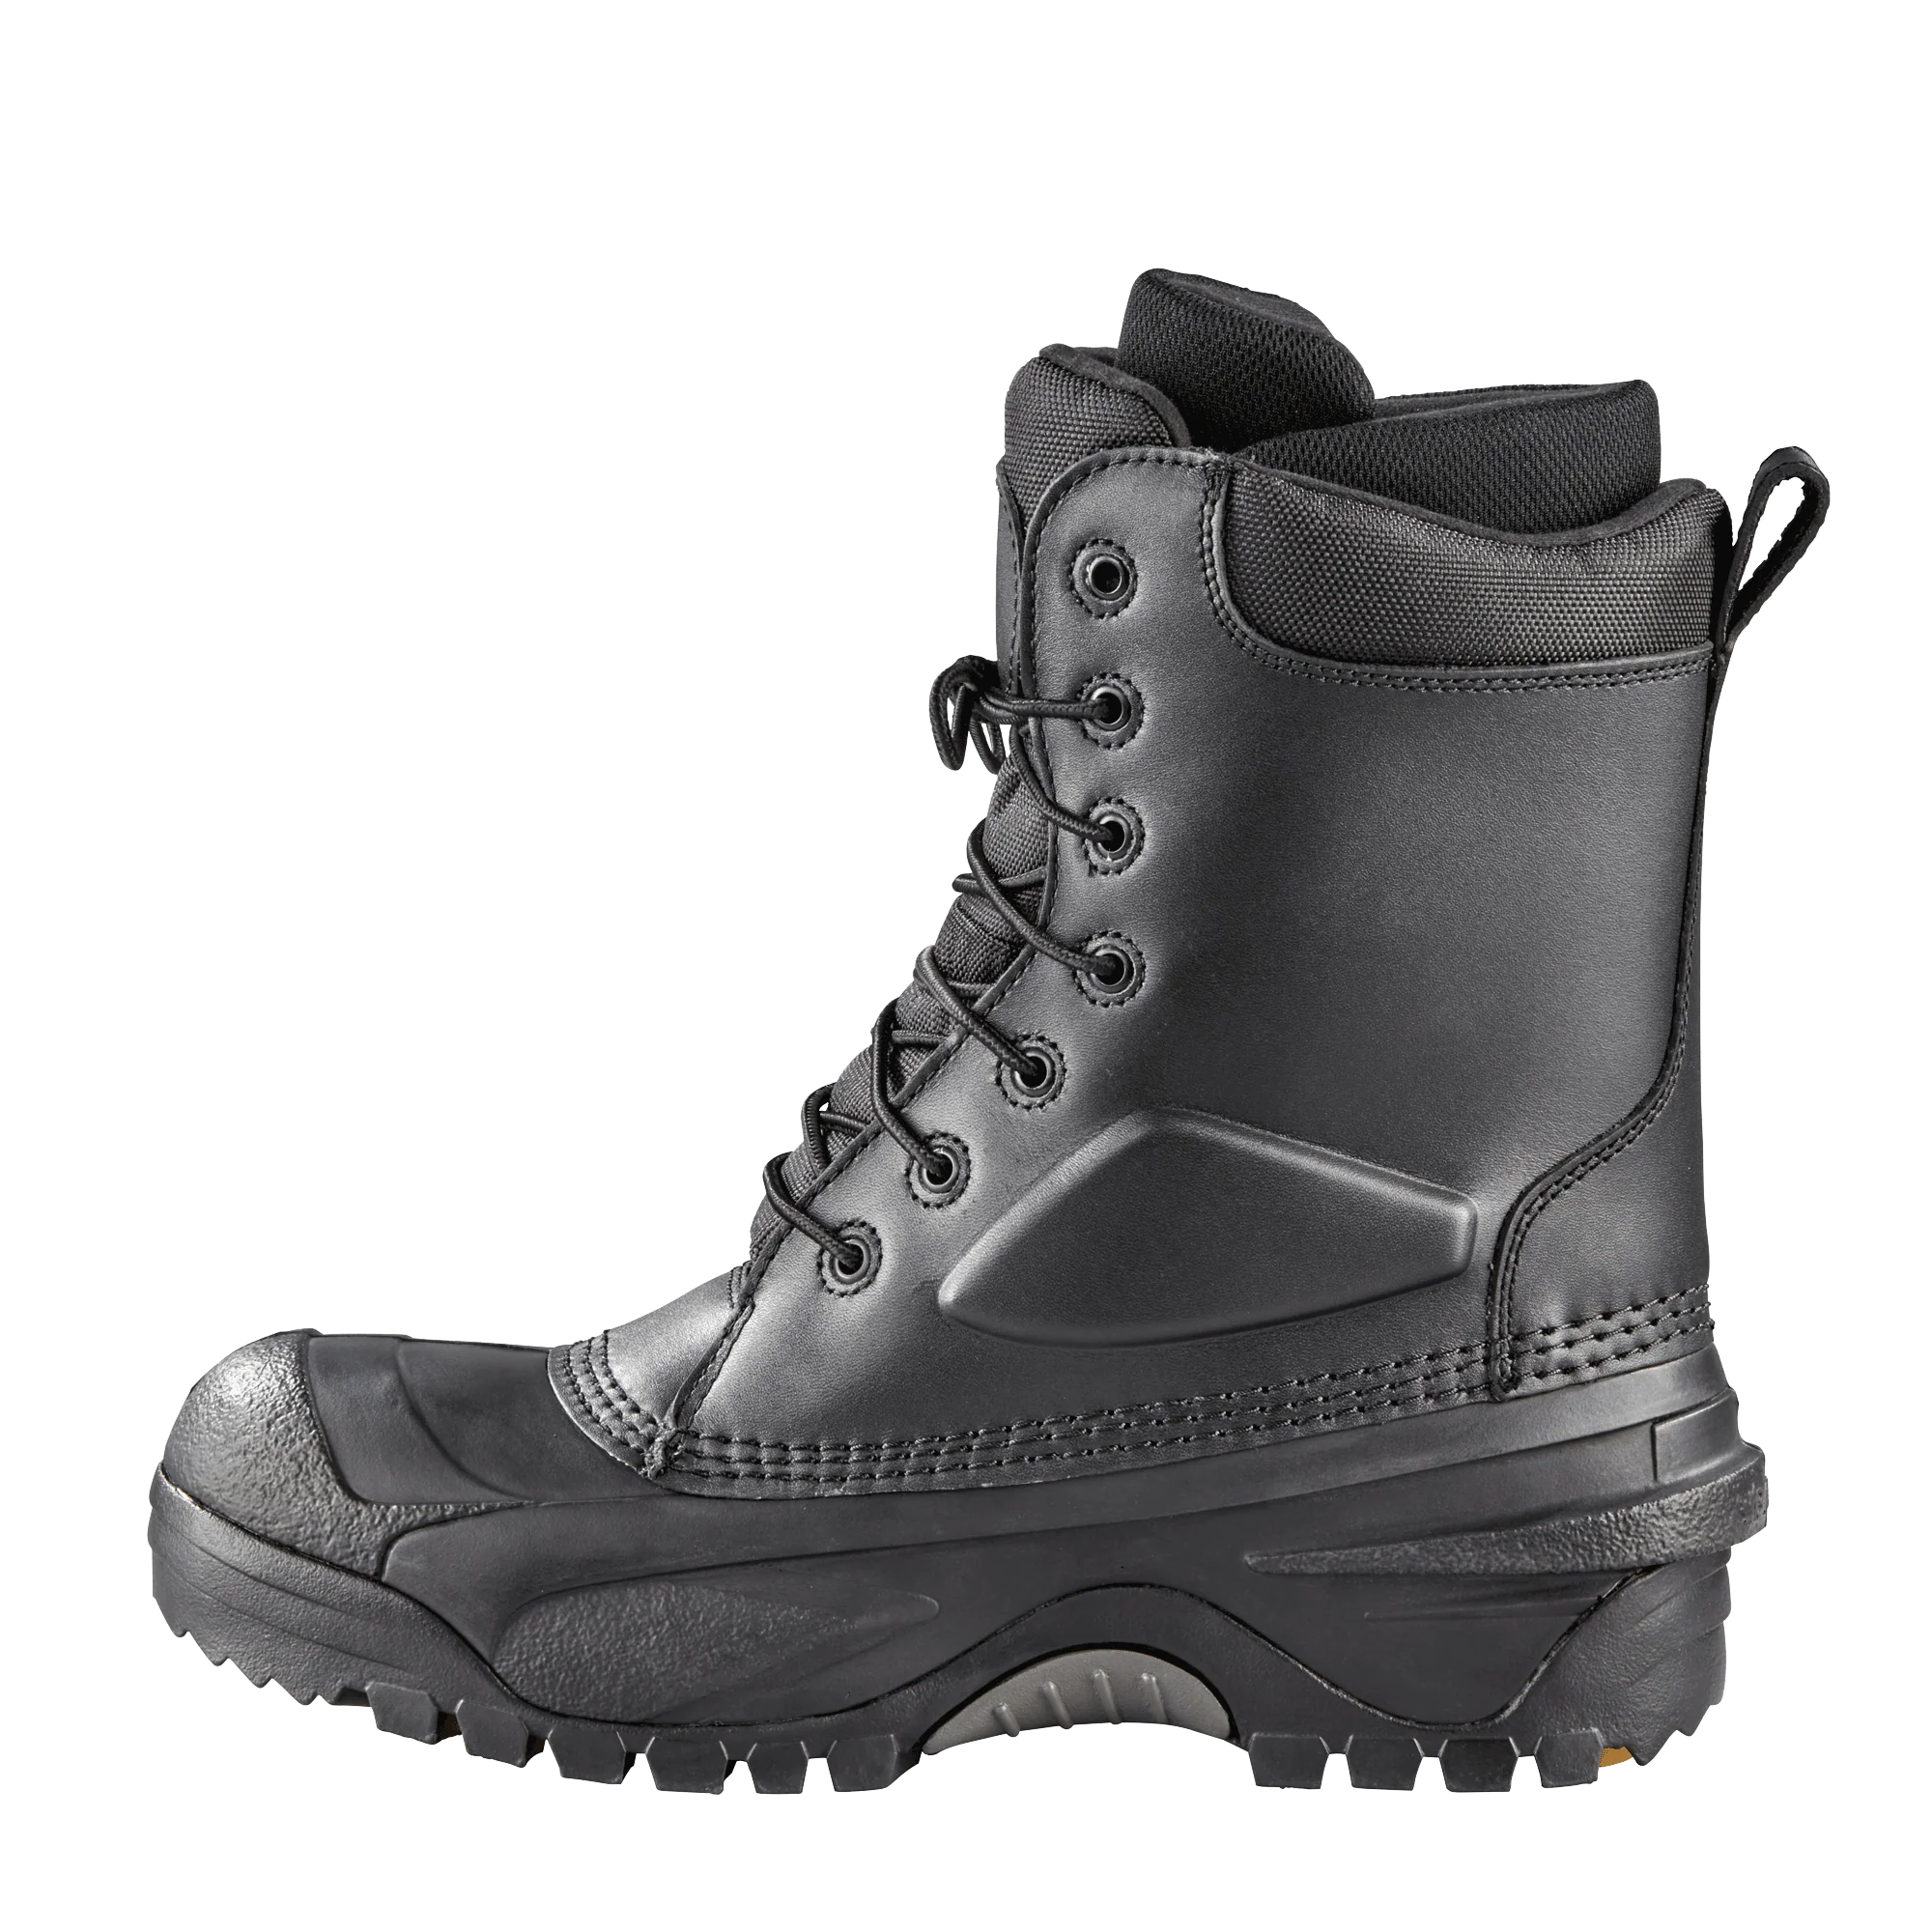 Baffin – Workhorse – Boot – #7175-0238 – Left